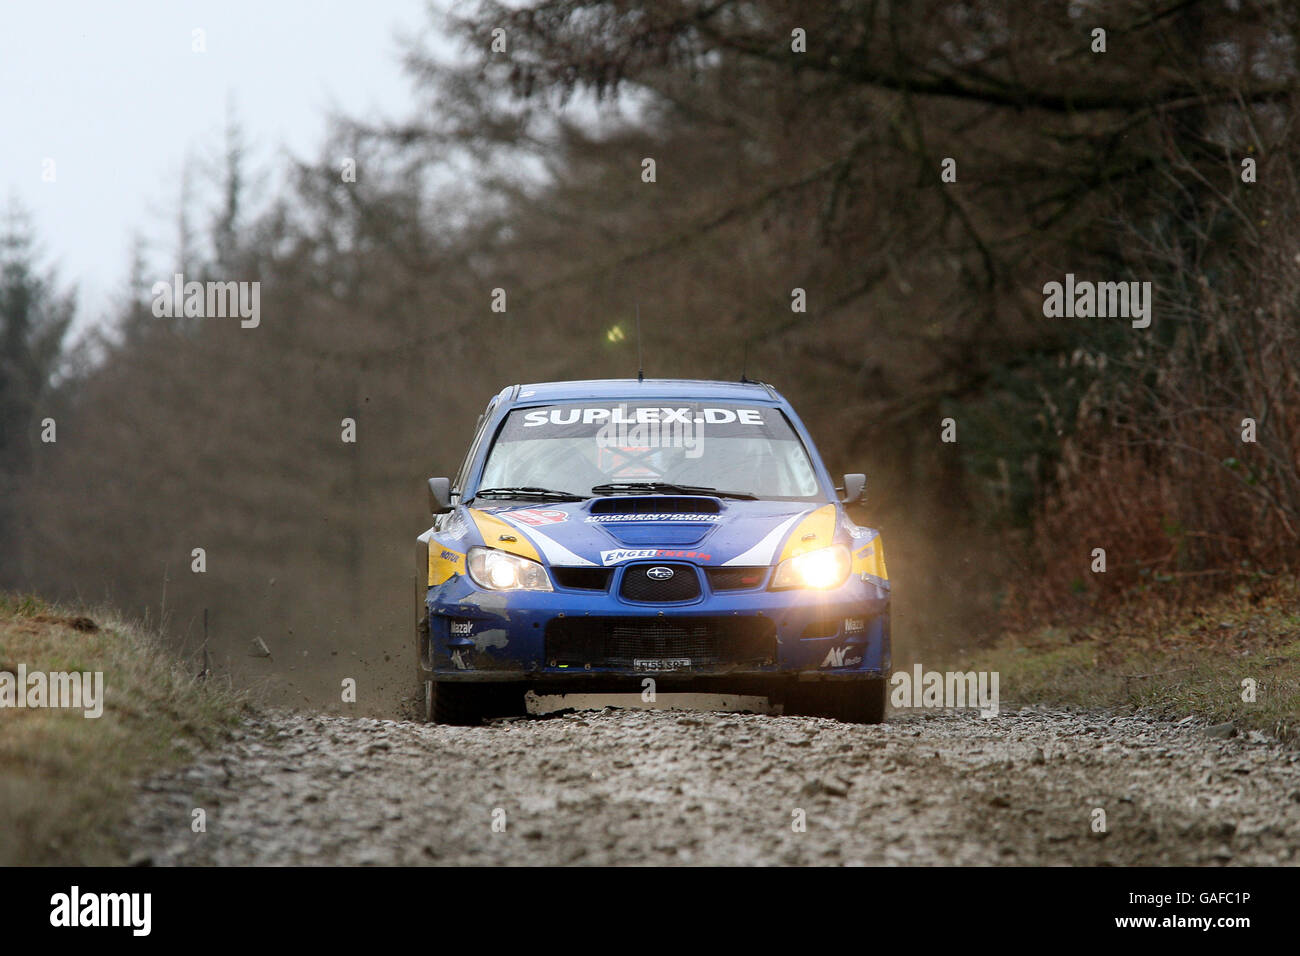 Mark Van Eldik dell'Olanda nel suo indipendente Subaru Impreza WRC nel Wales Rally GB. Foto Stock